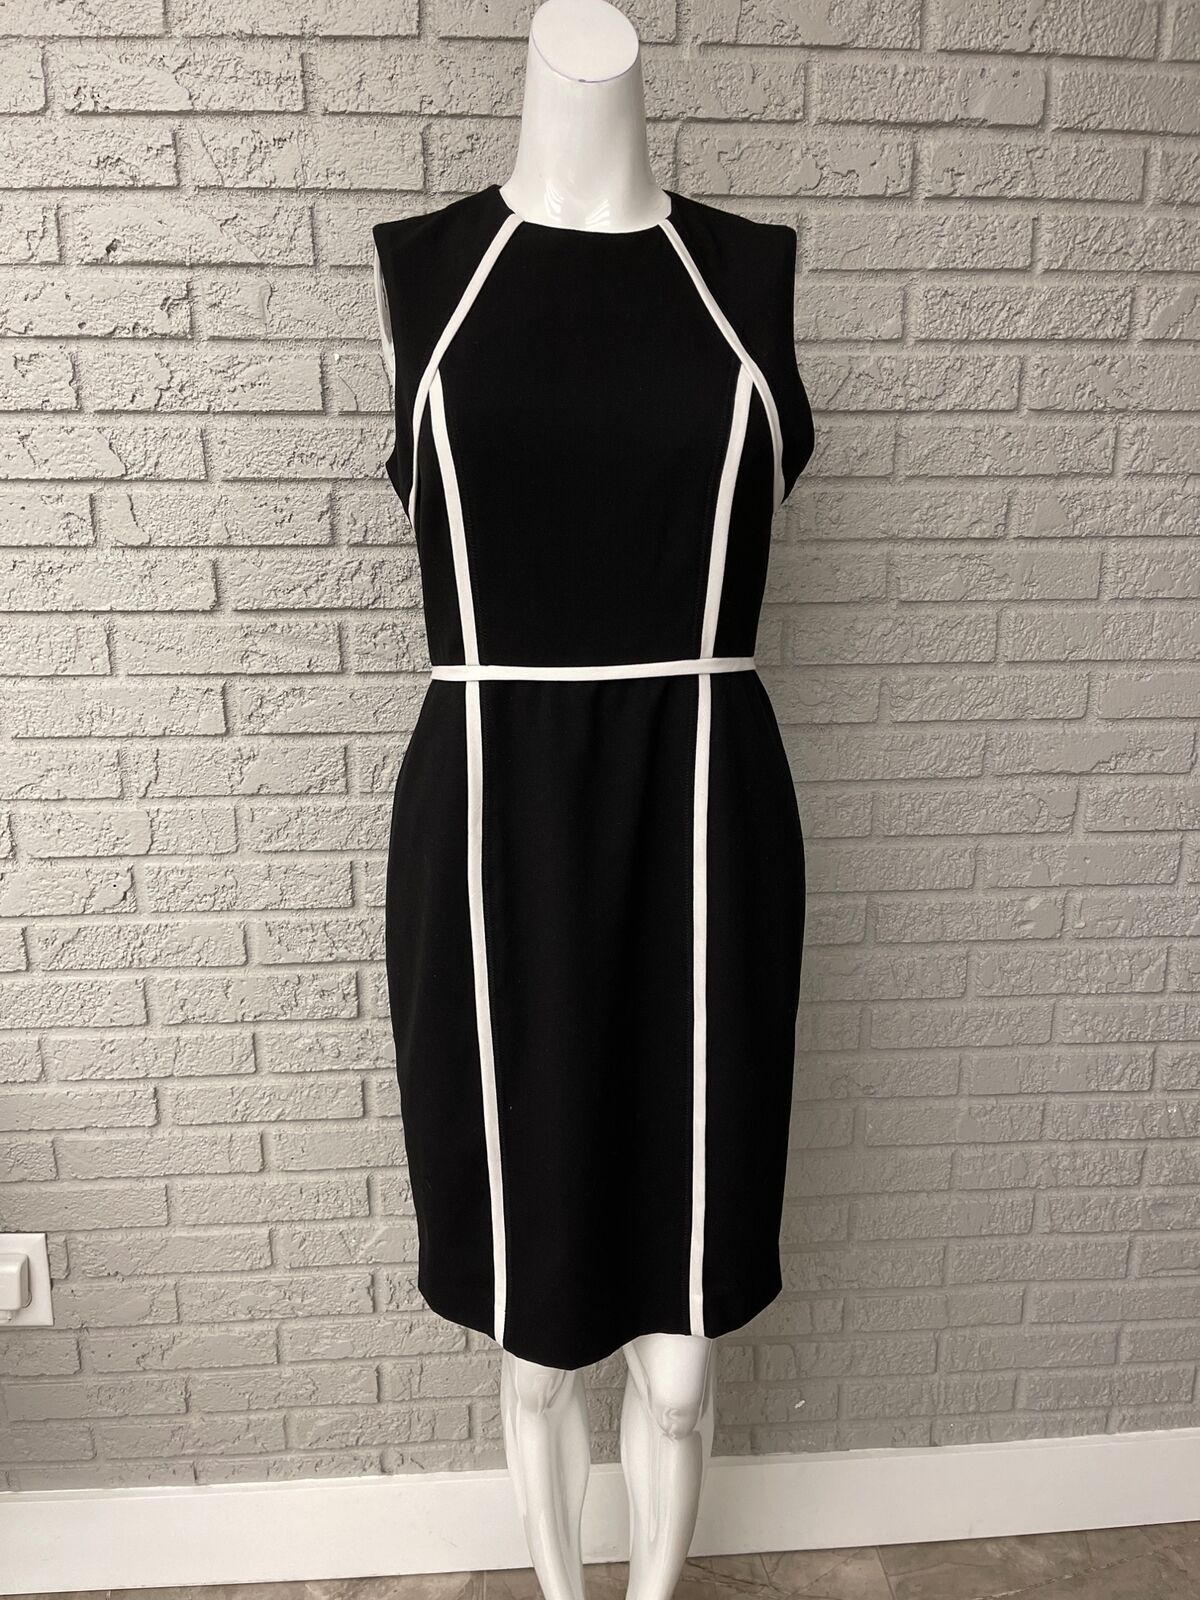 Calvin Klein Black & White Piping Sheath Dress Size 4 | eBay